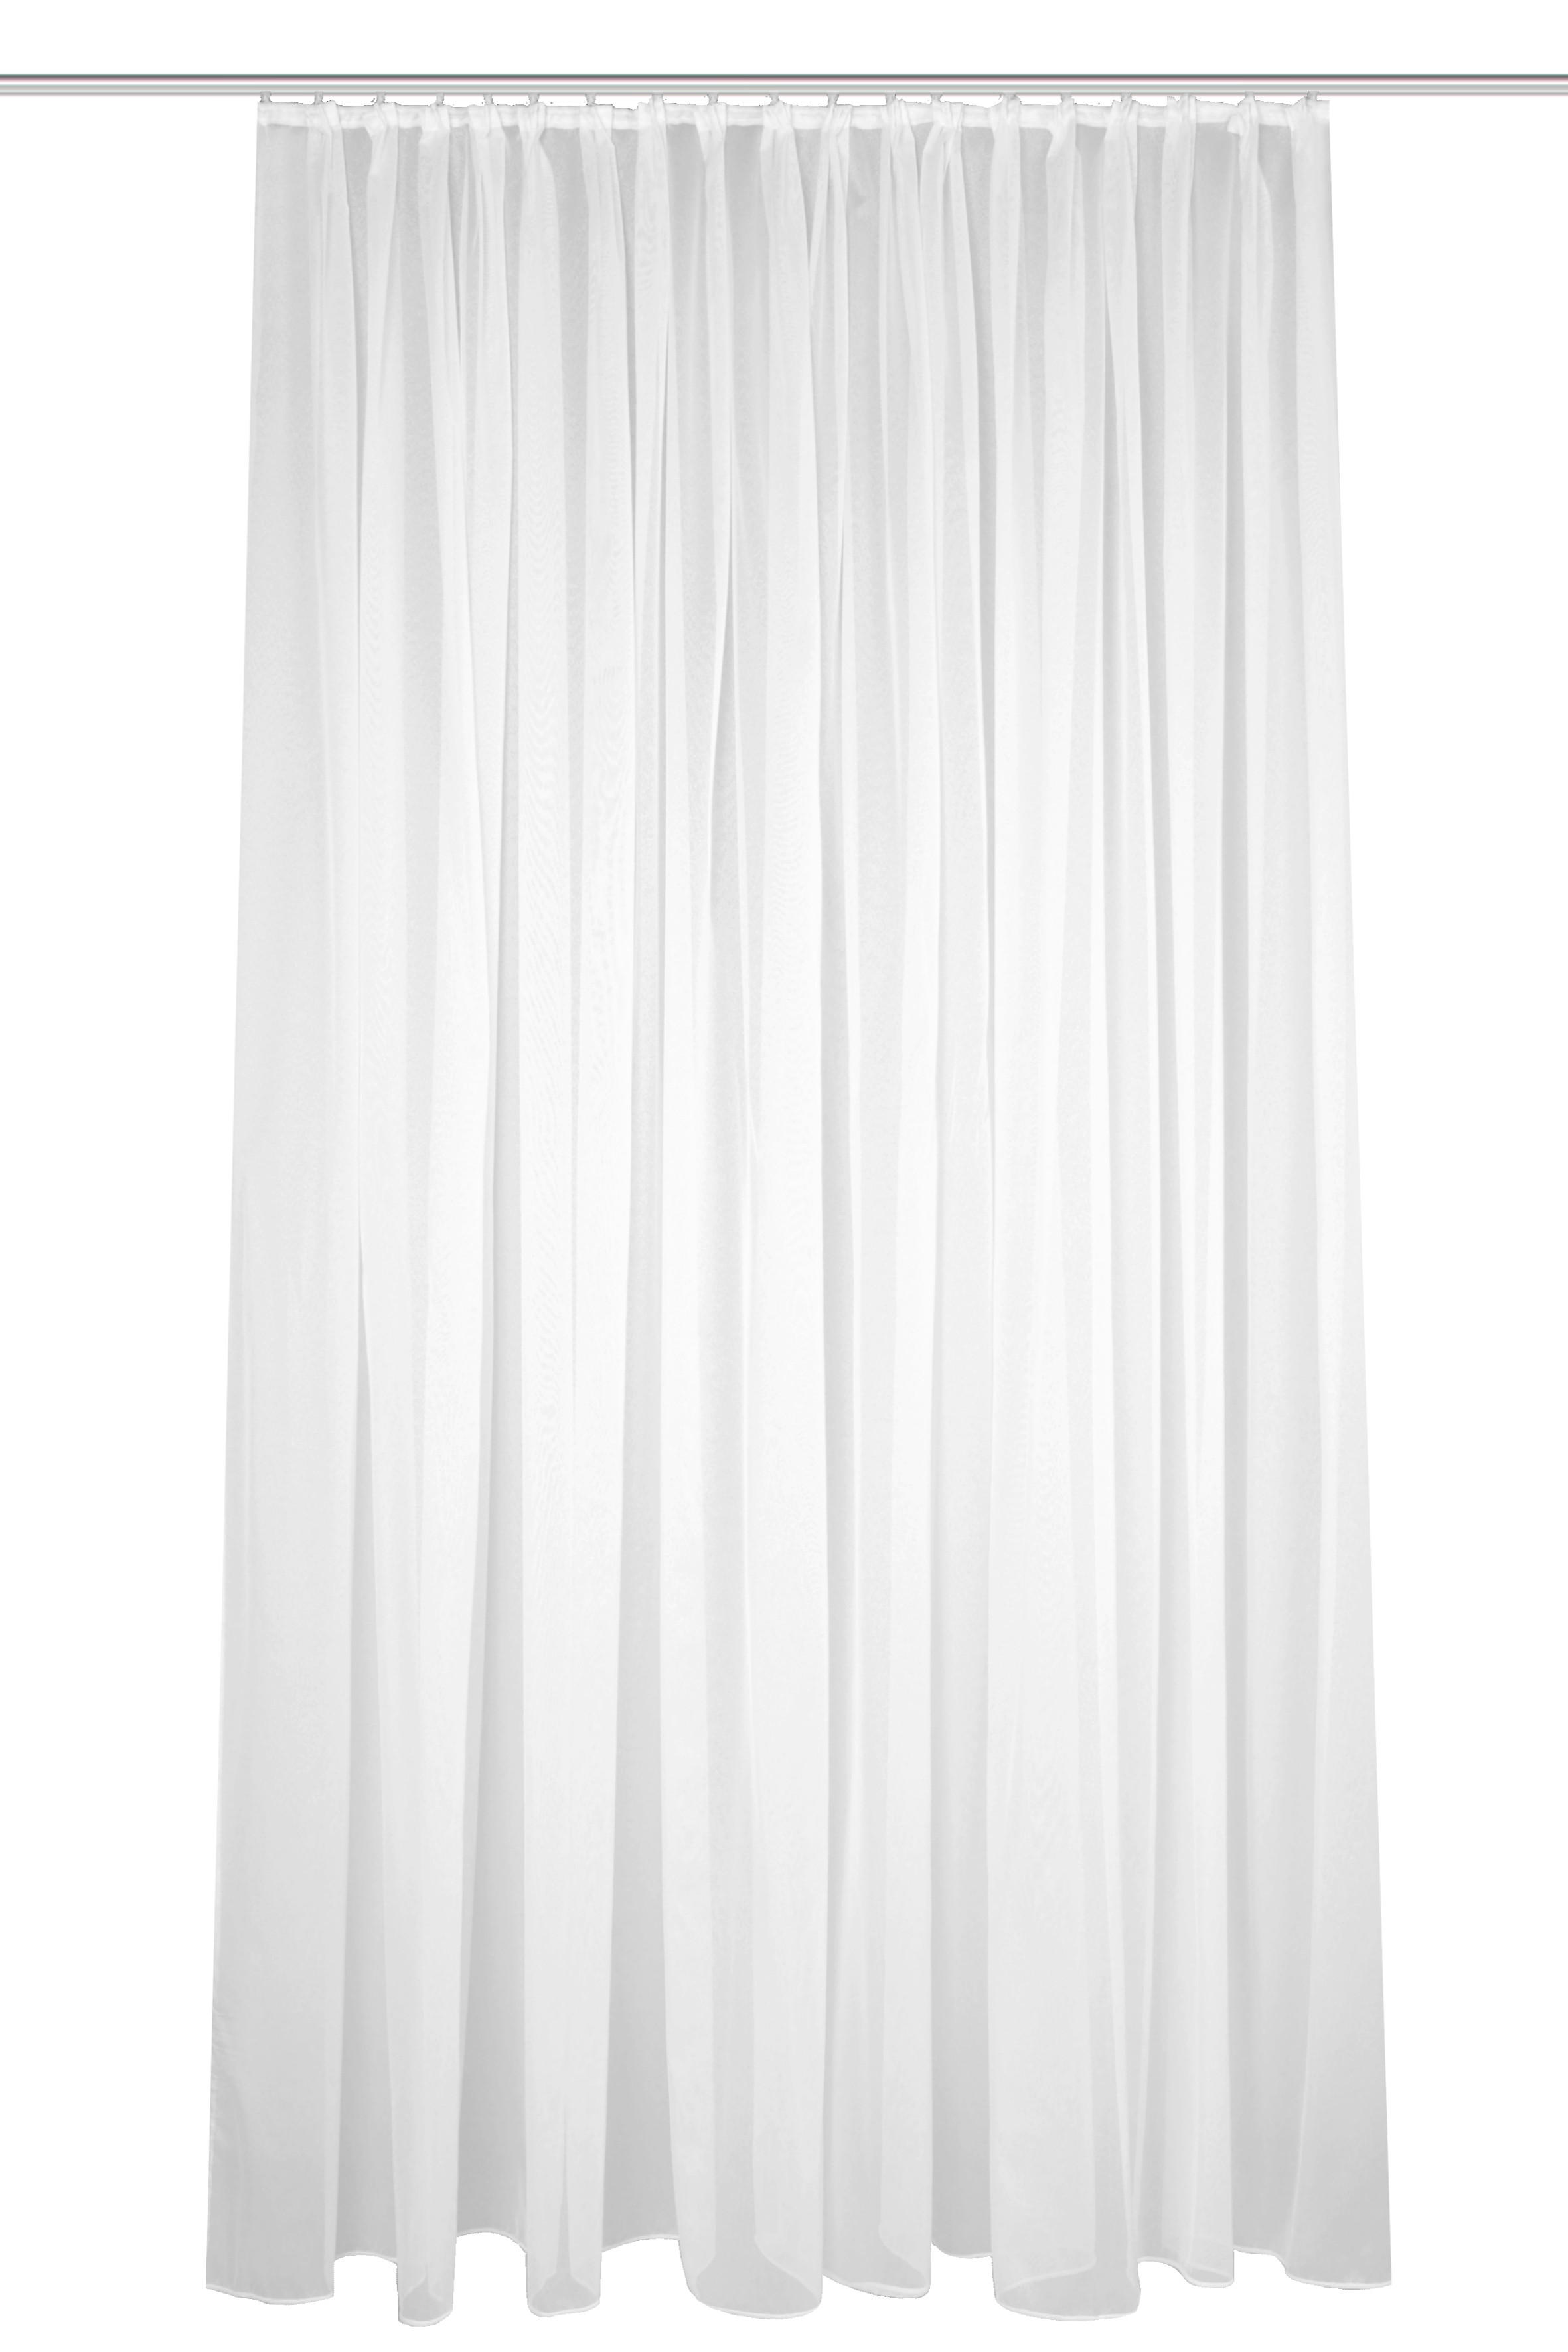 FERTIGSTORE  transparent  600/175 cm   - Weiß, Basics, Textil (600/175cm) - Schmidt W. Gmbh